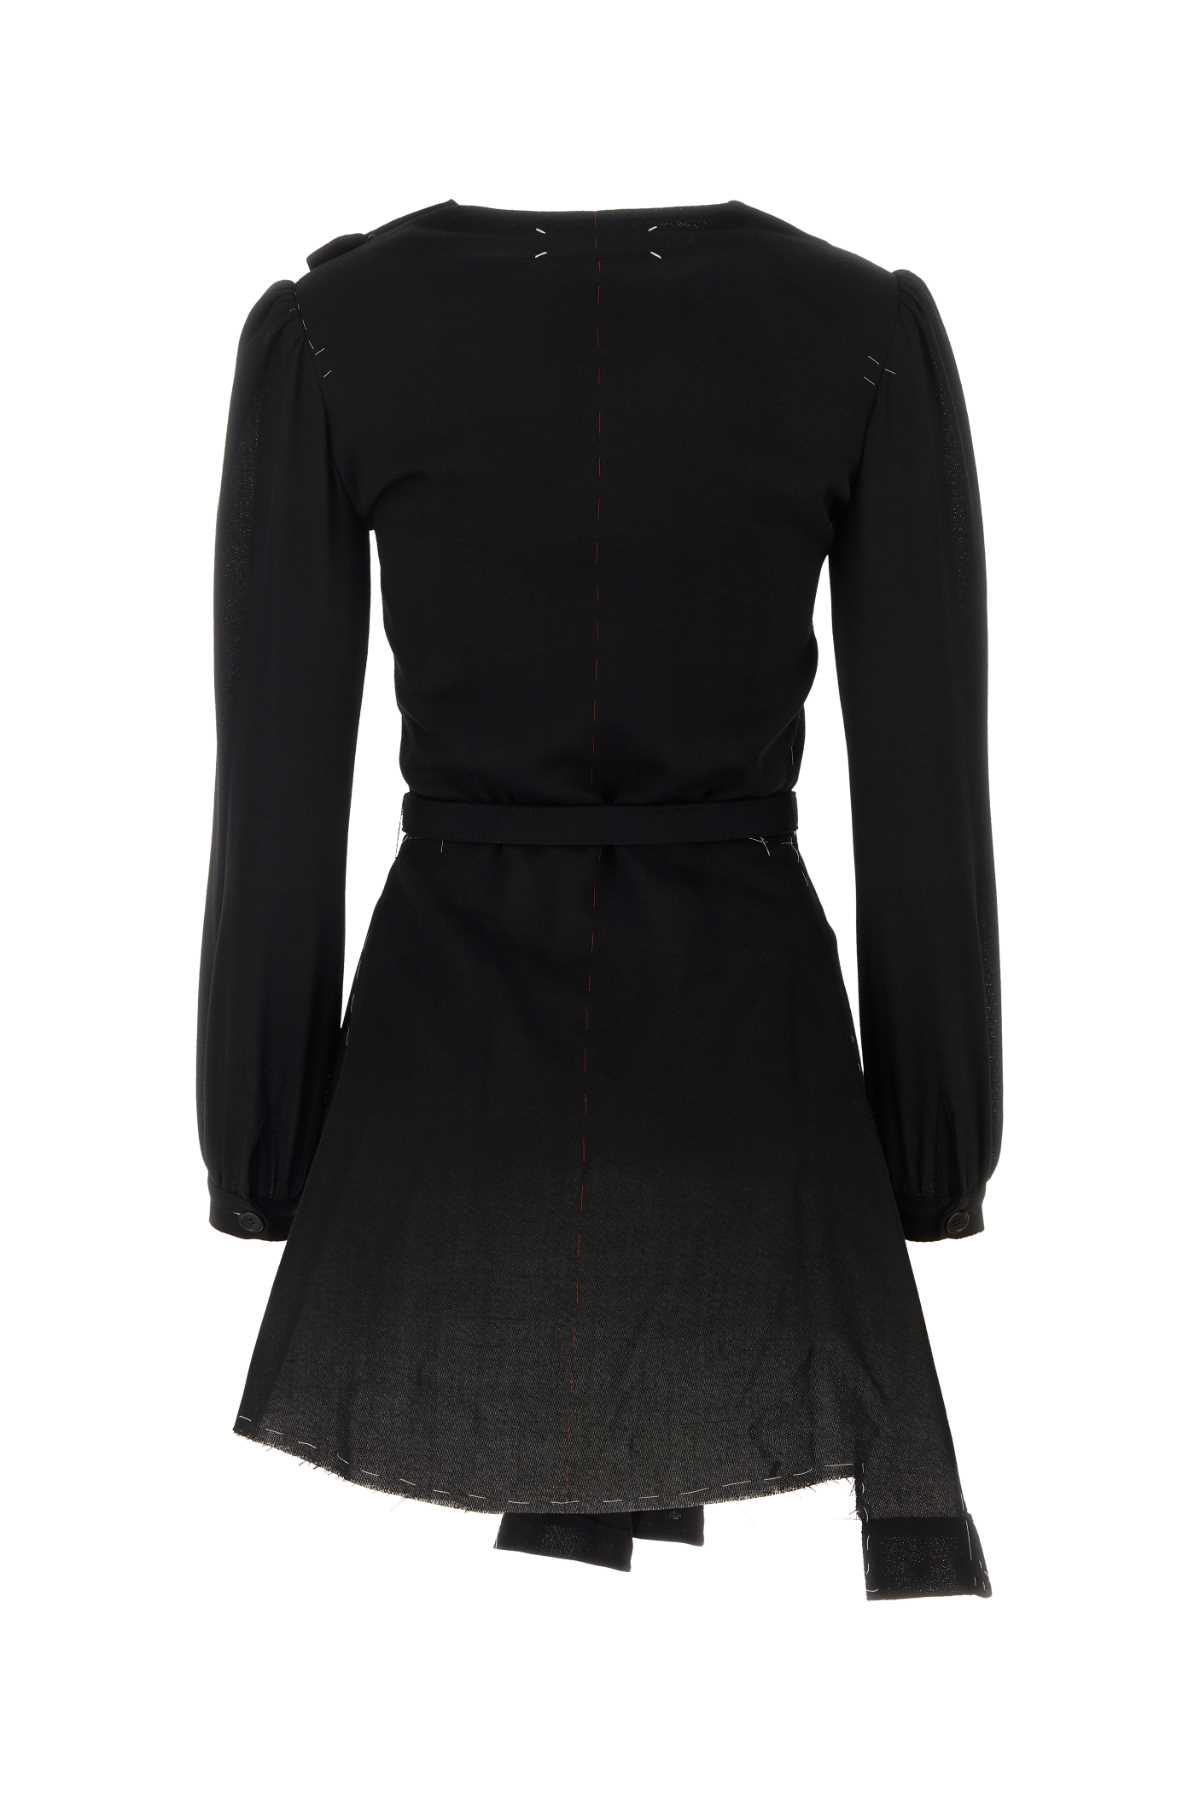 Maison Margiela Black Wool Mini Shirt Dress